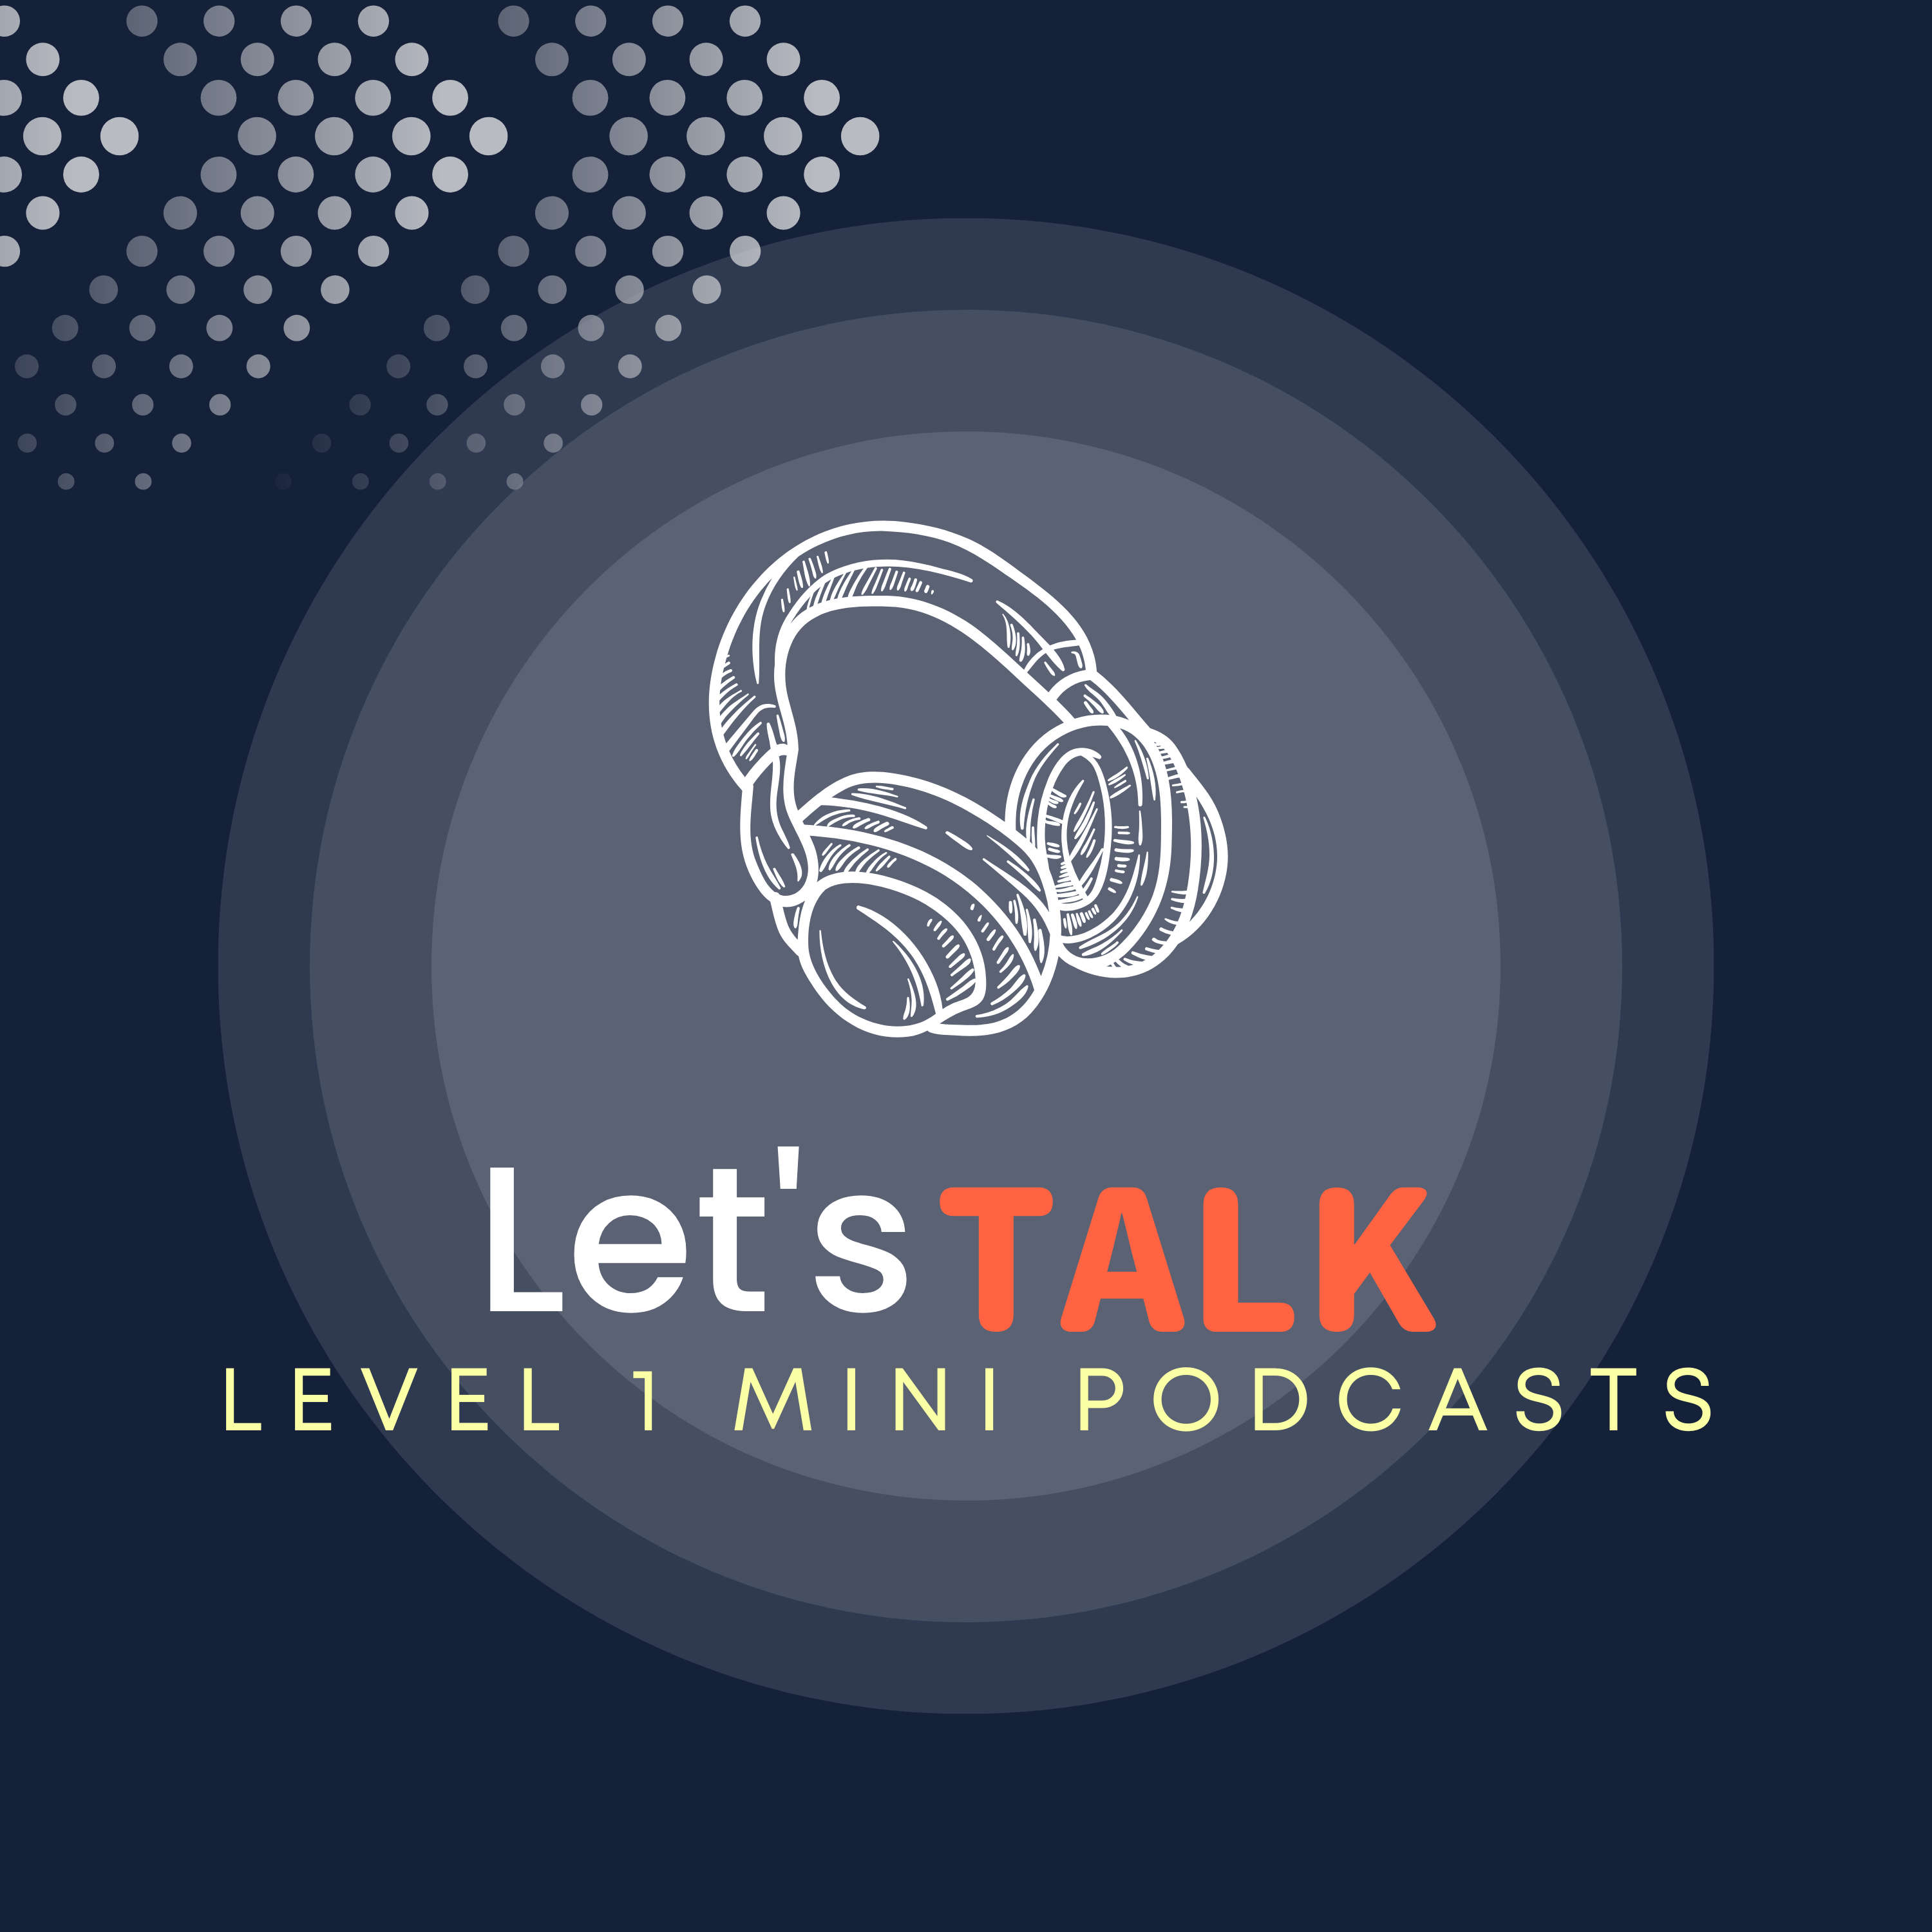 Level 1 Mini Podcasts